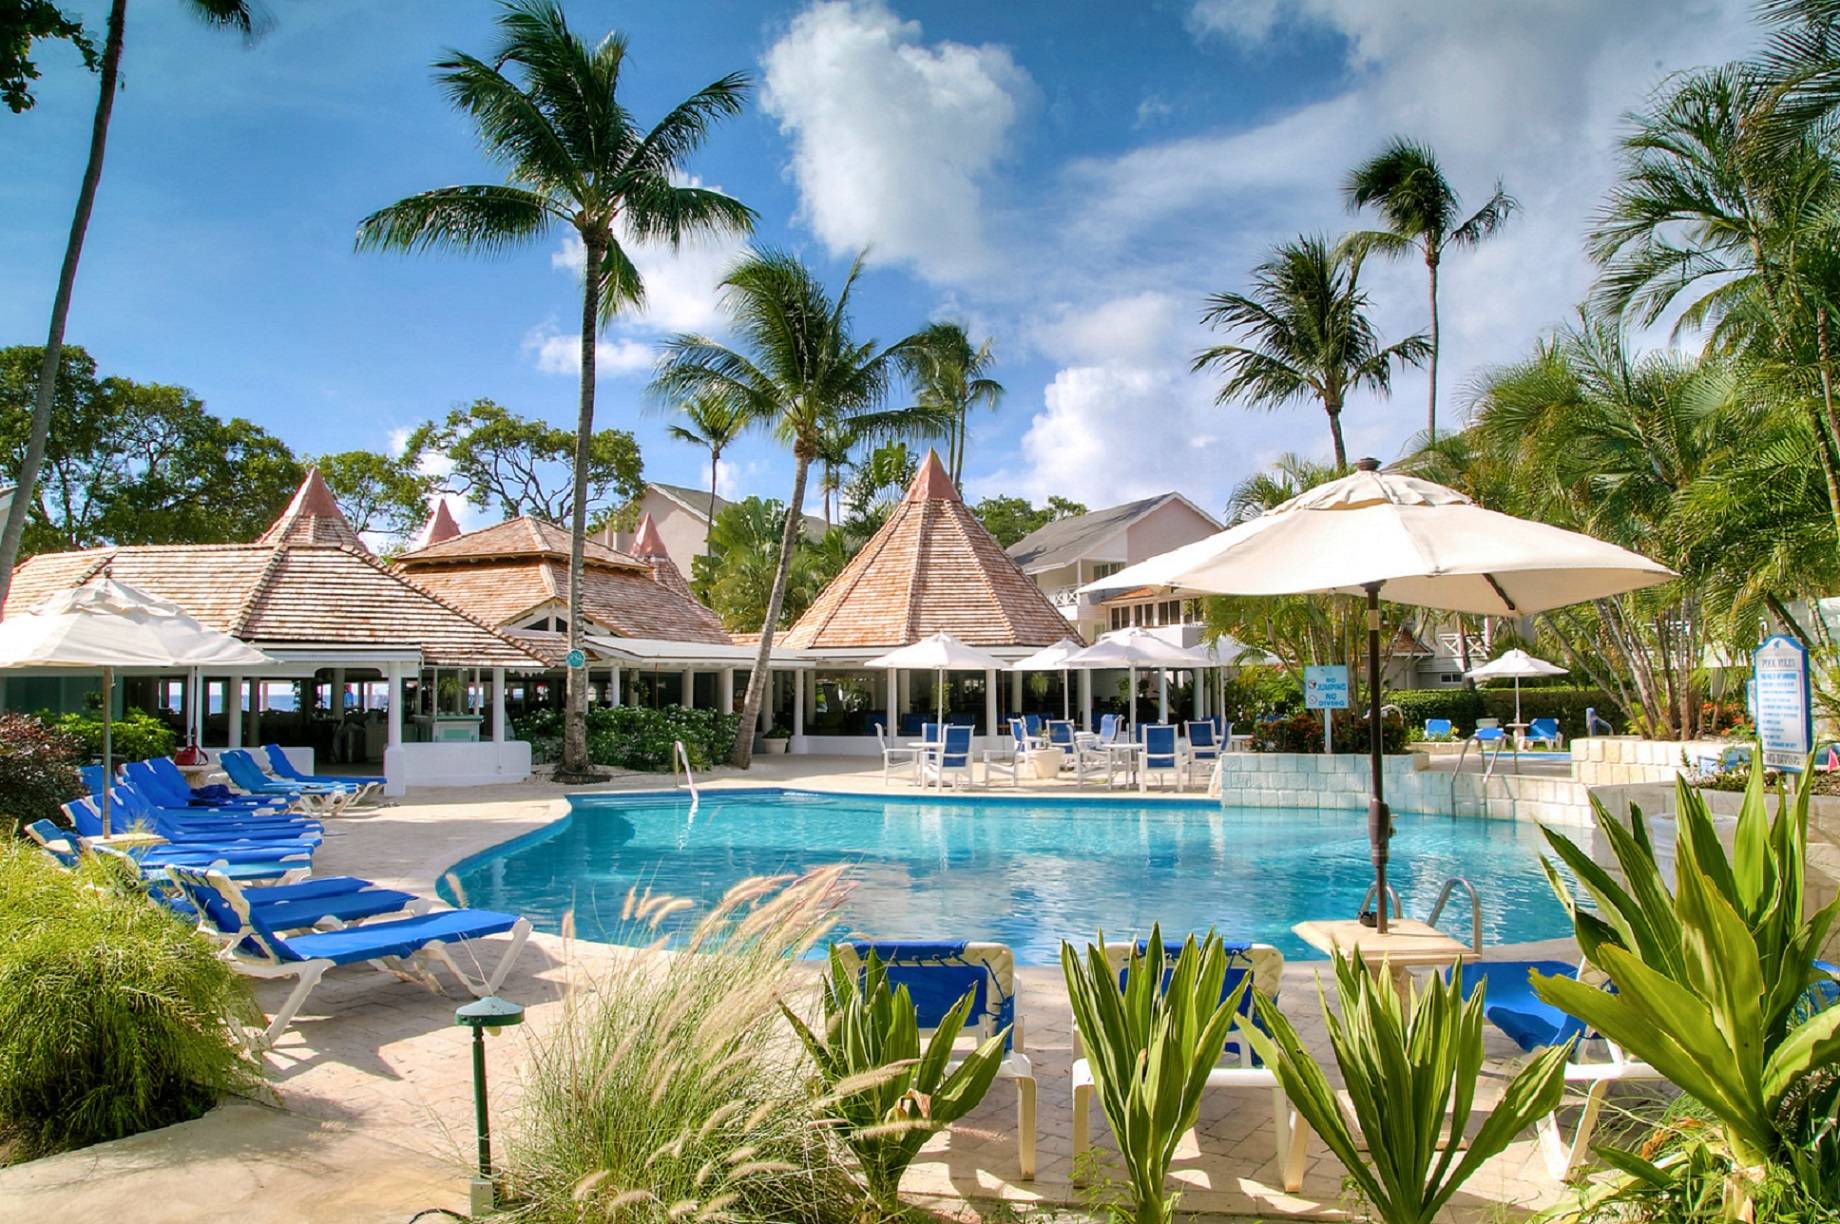 The Club Barbados, Pool Area